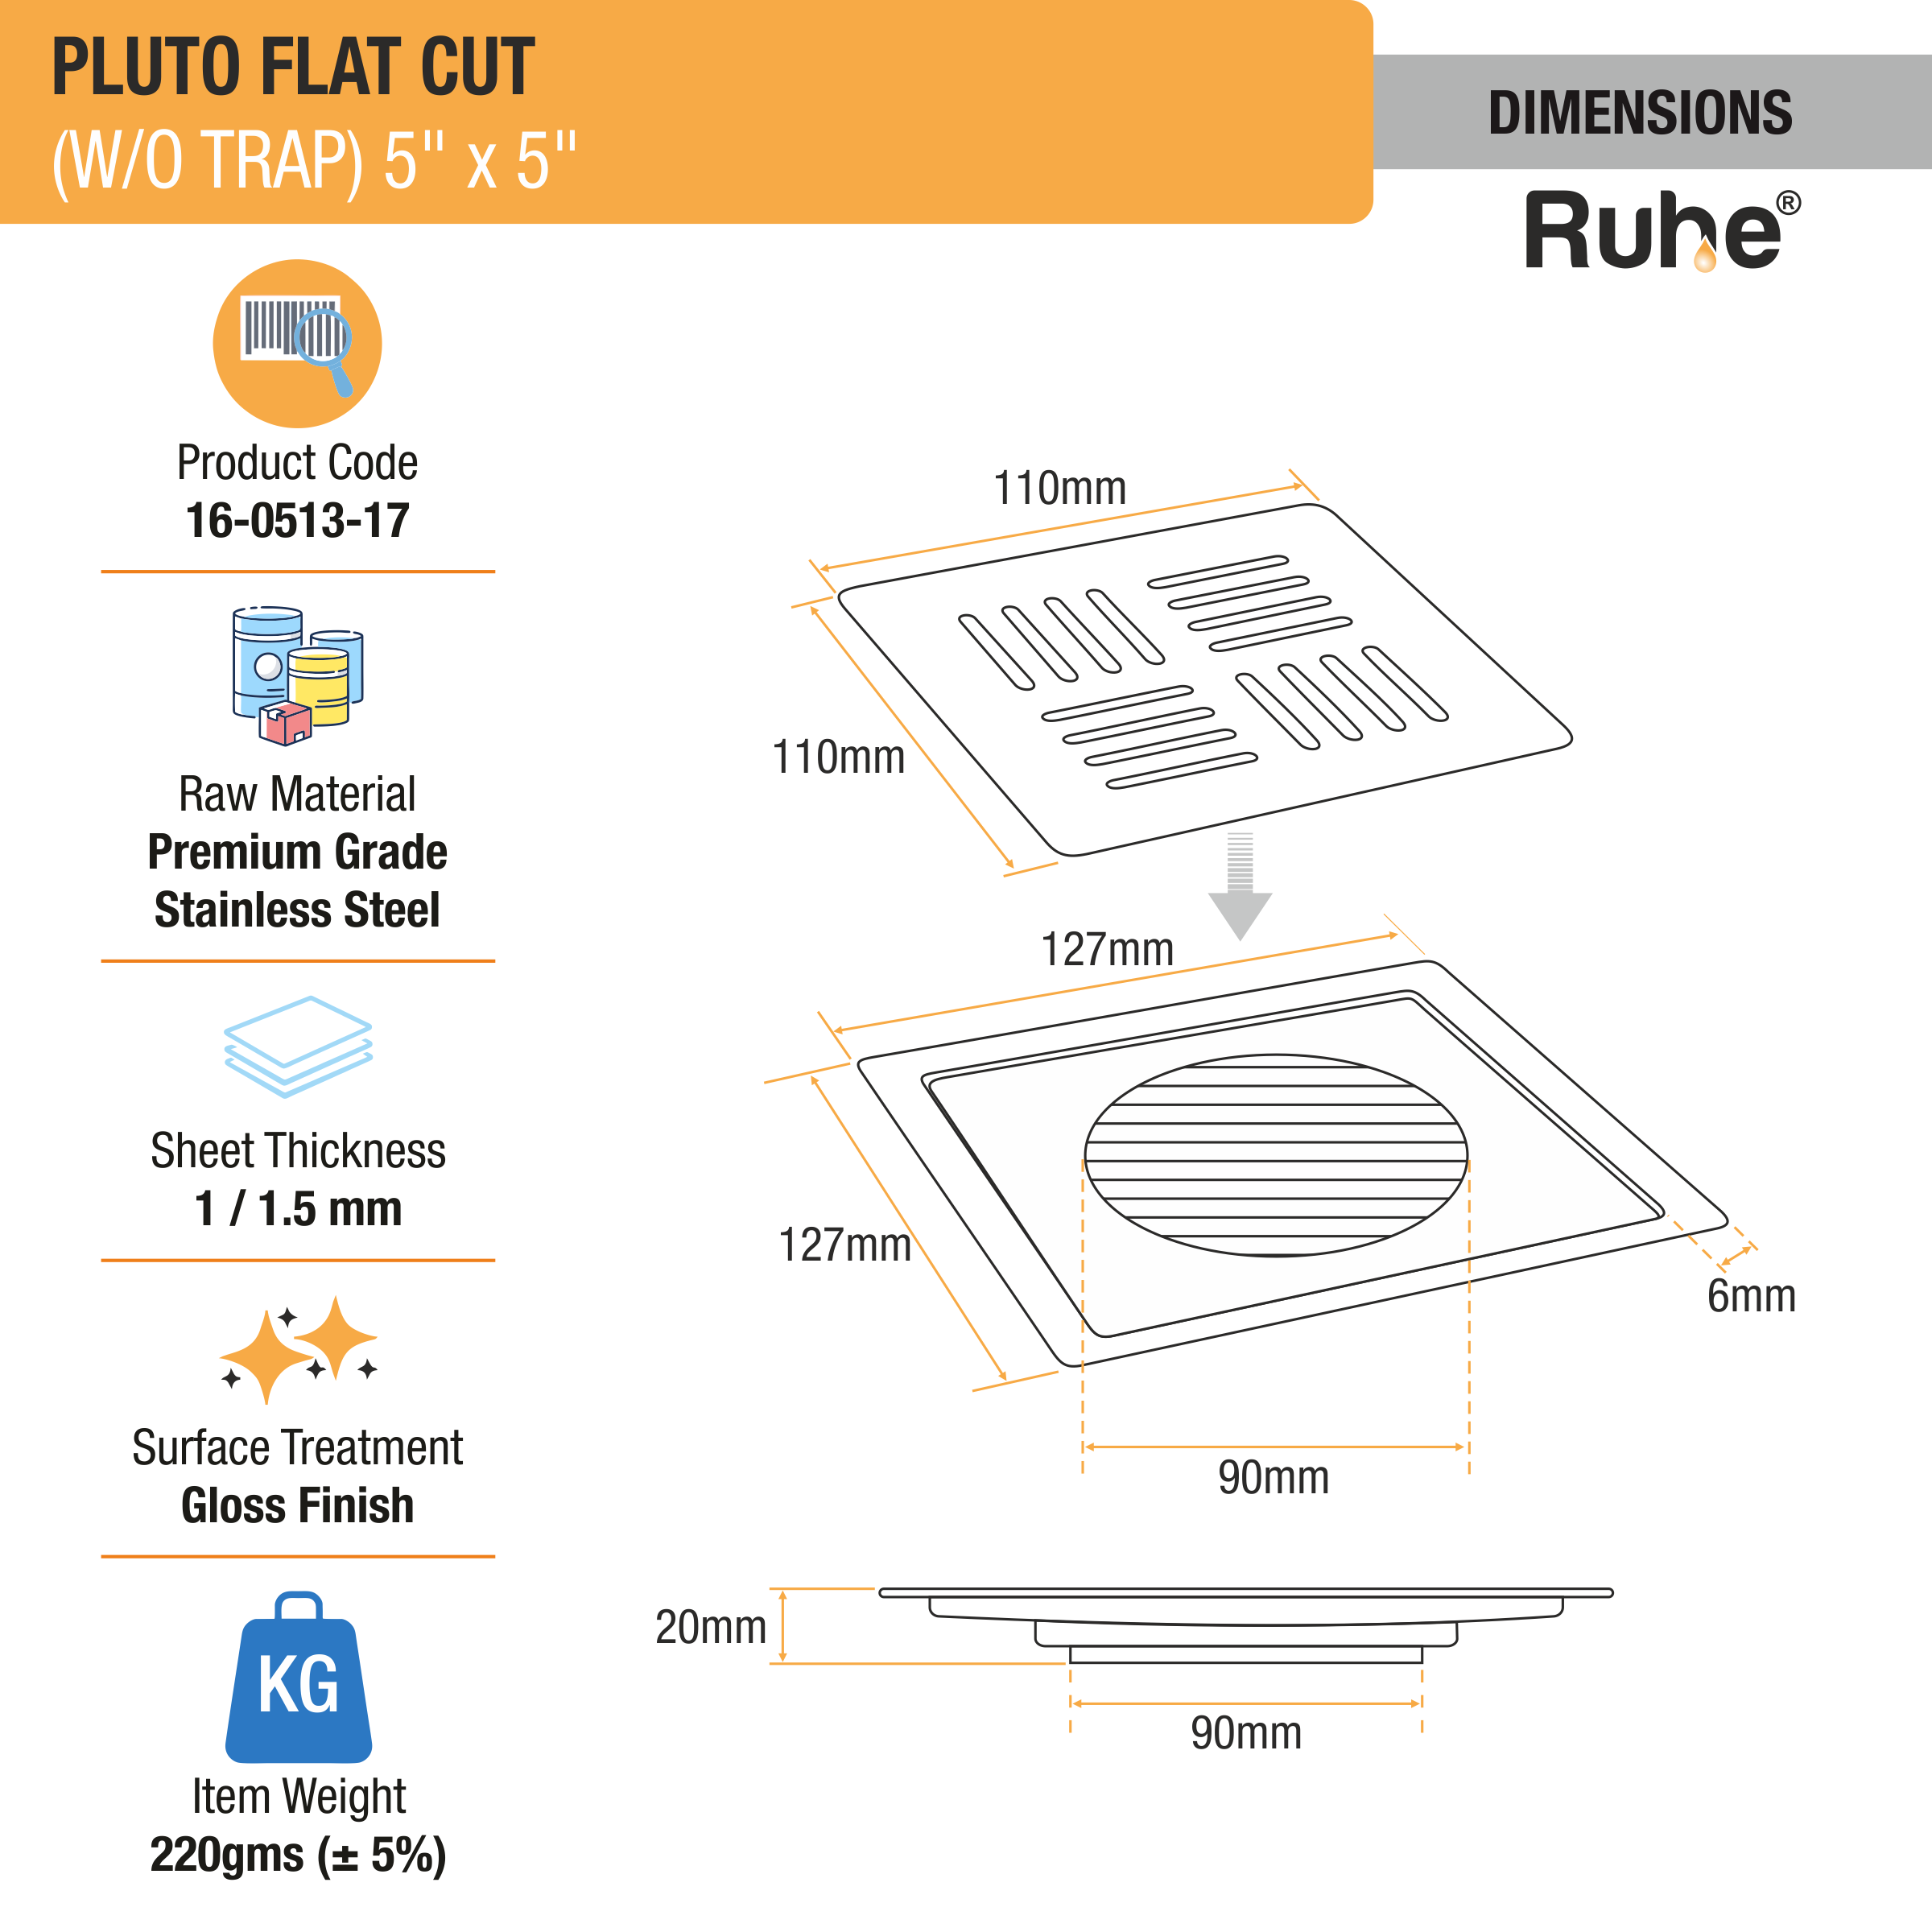 Pluto Square Premium Flat Cut Floor Drain (5 x 5 Inches) dimensions and size